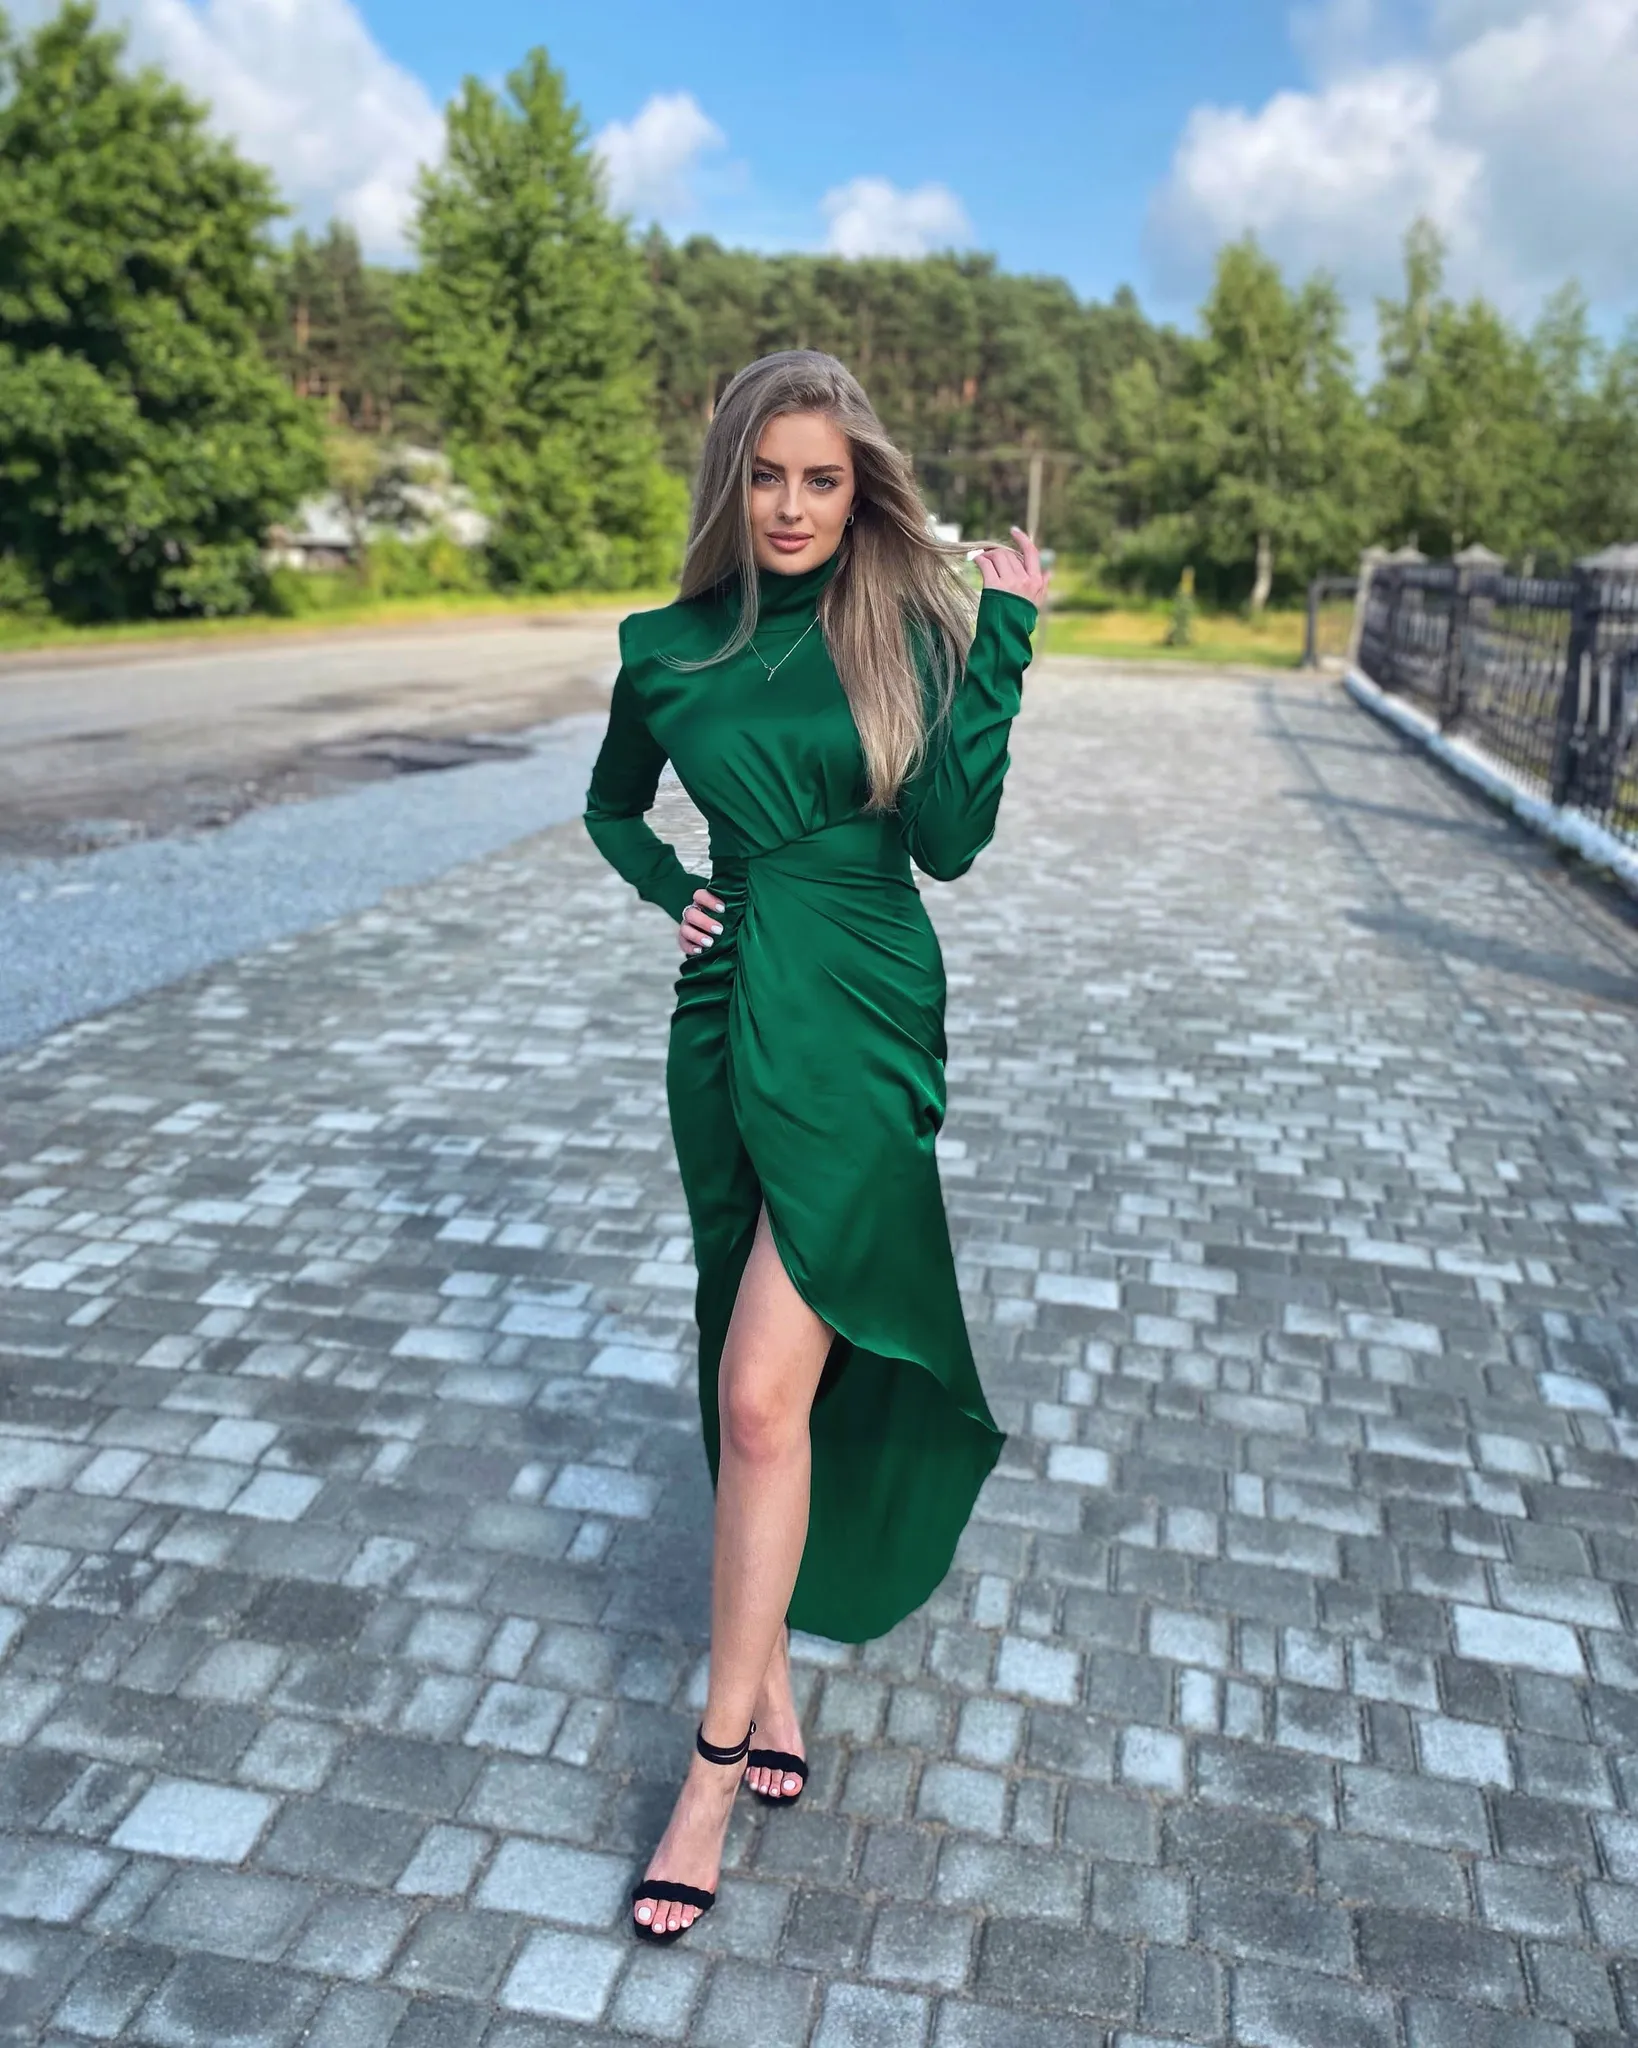 Alexa russian brides profiles